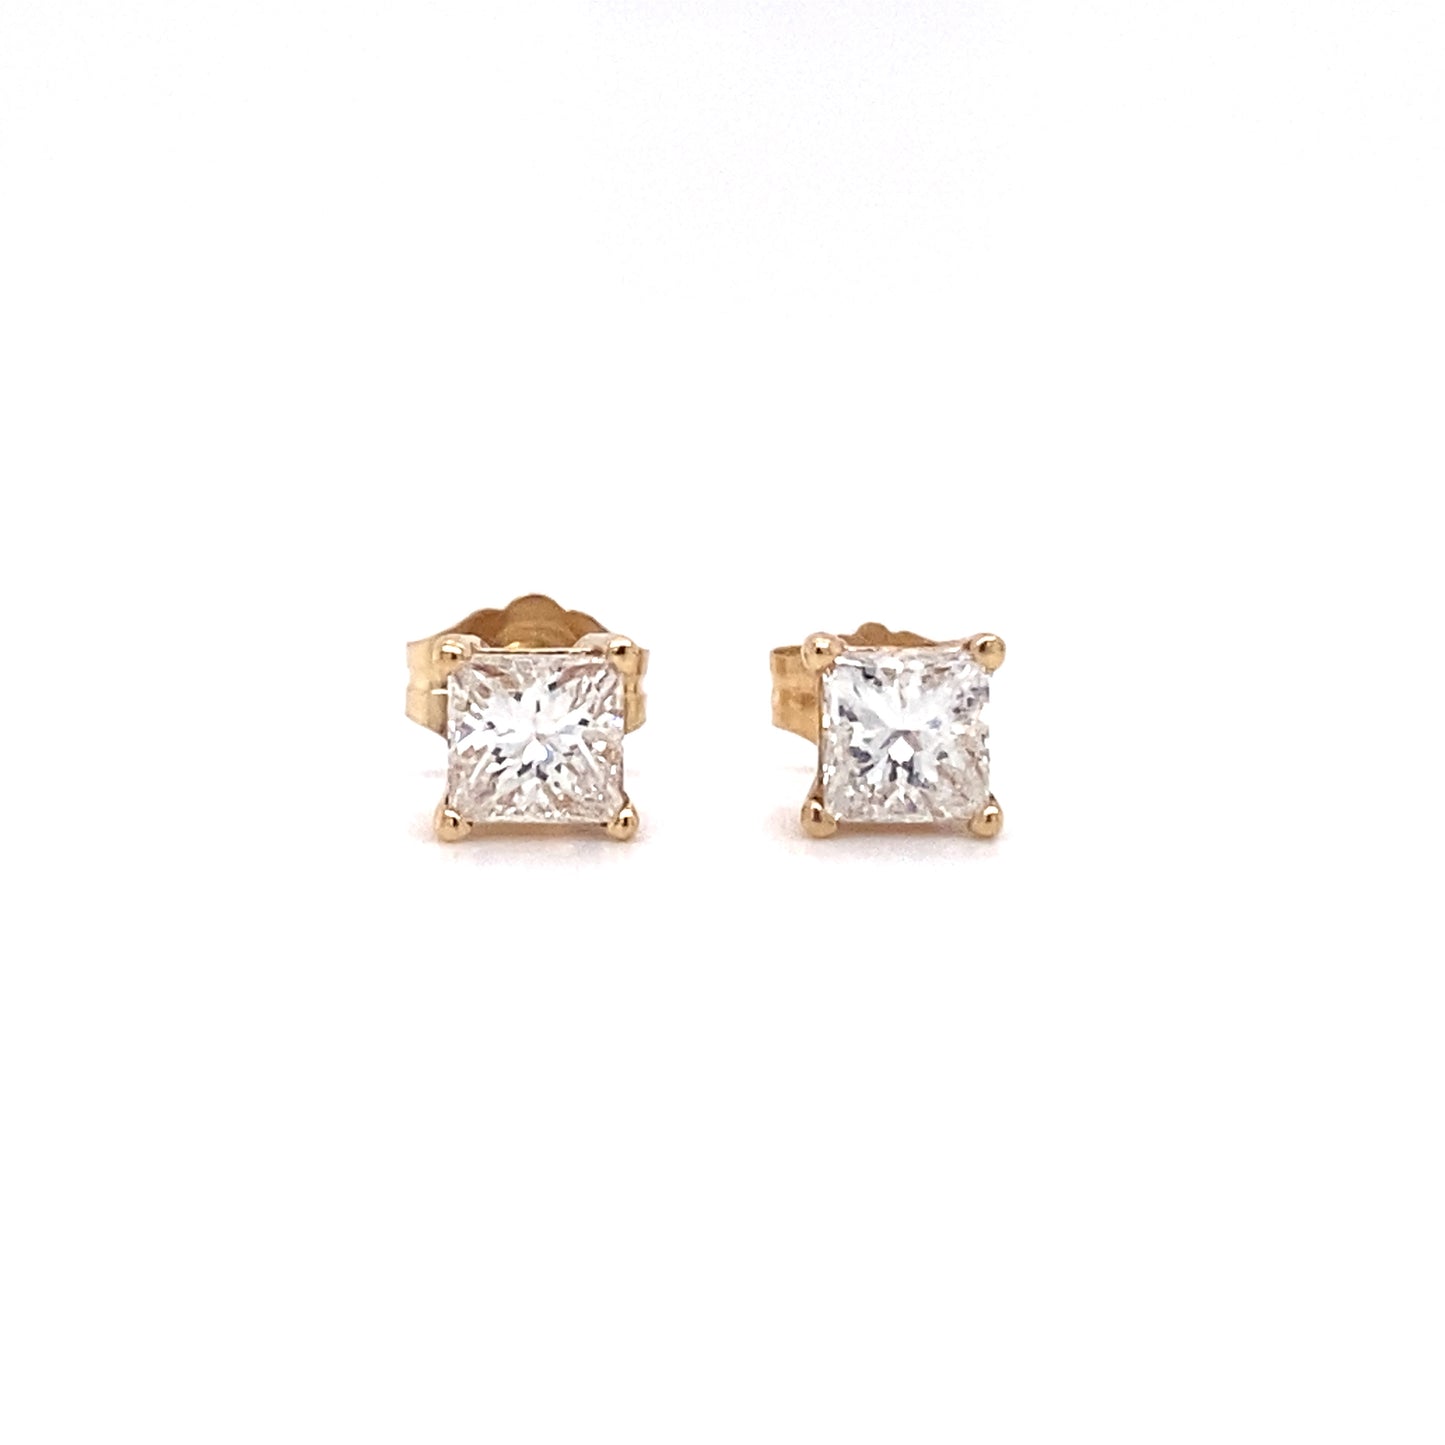 Circa 1990 0.75 Carat Princess Cut Diamond Stud Earrings in 14K Gold